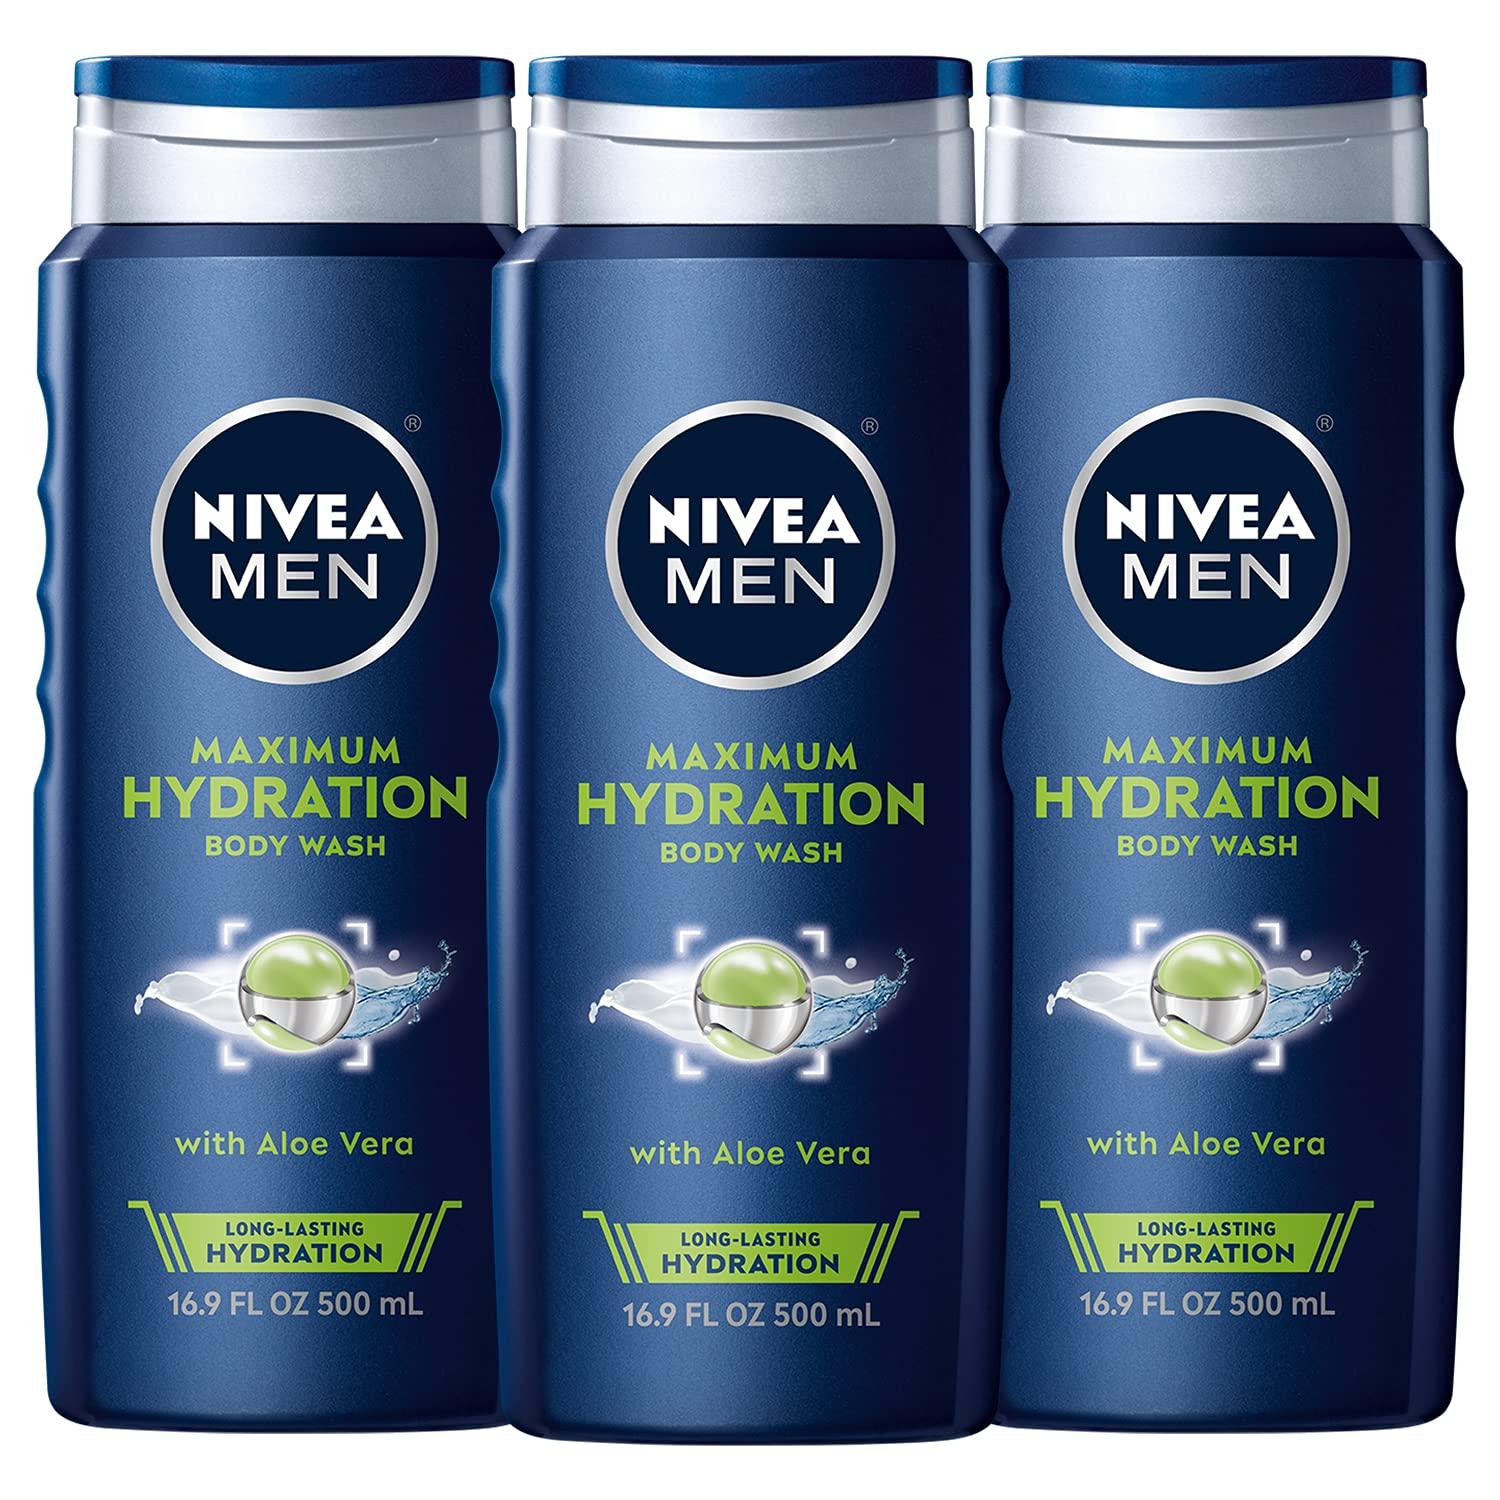 Nivea Men Maximum Hydration Body Wash 3 Pack for $8.93 Shipped